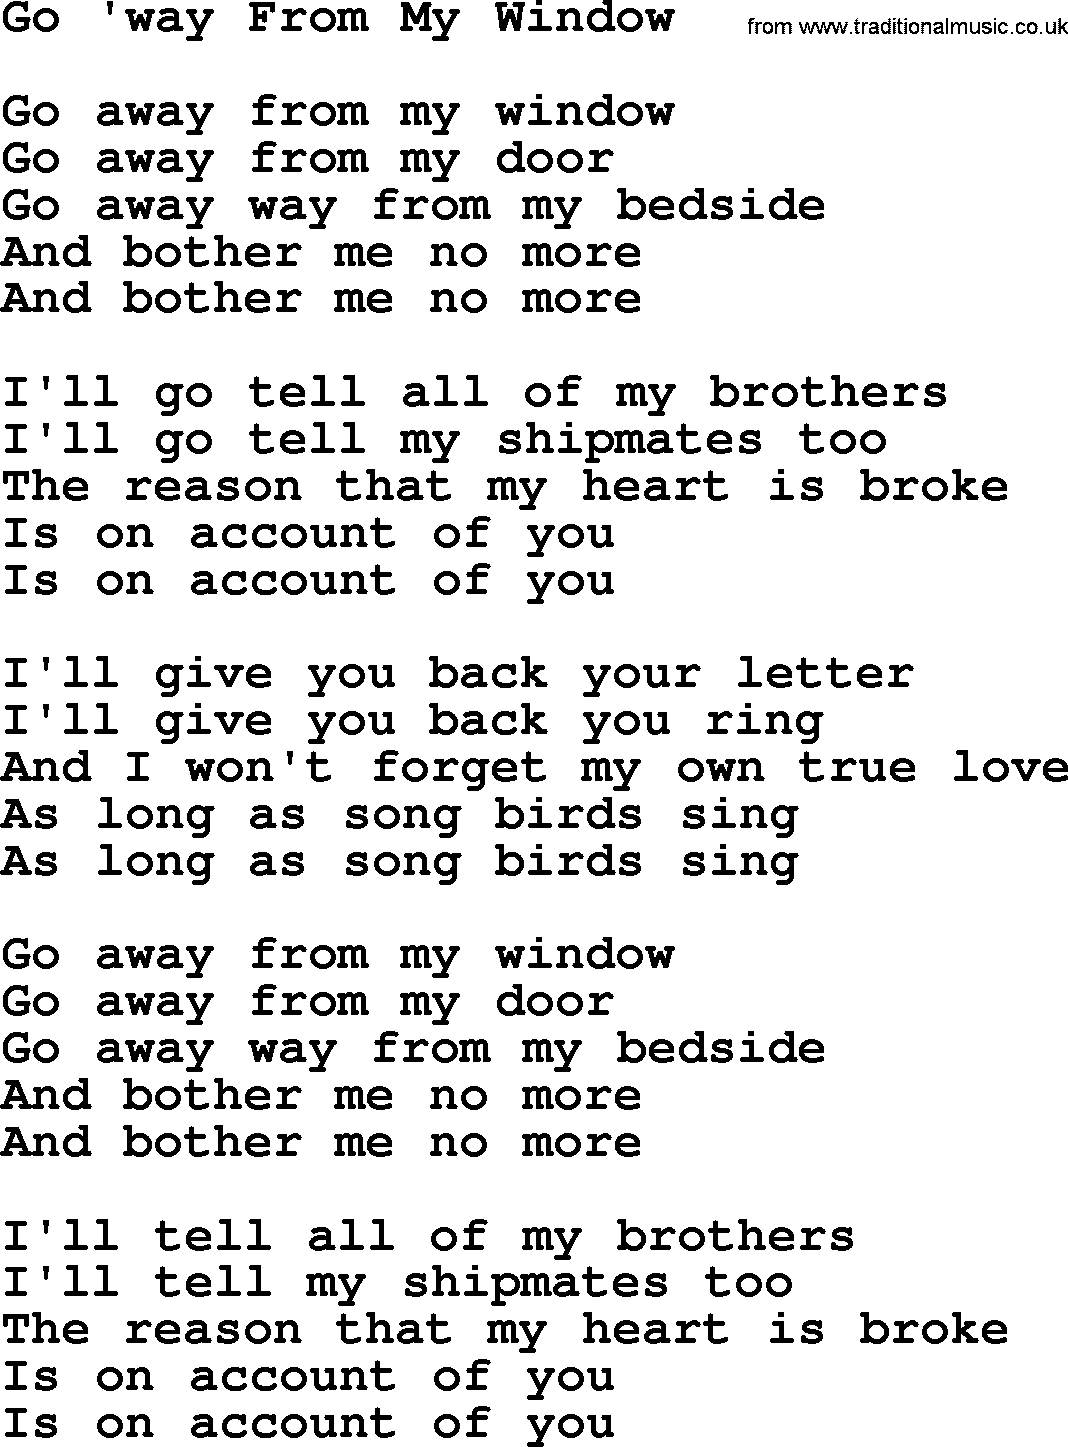 Joan Baez song Go Away From My Window, lyrics